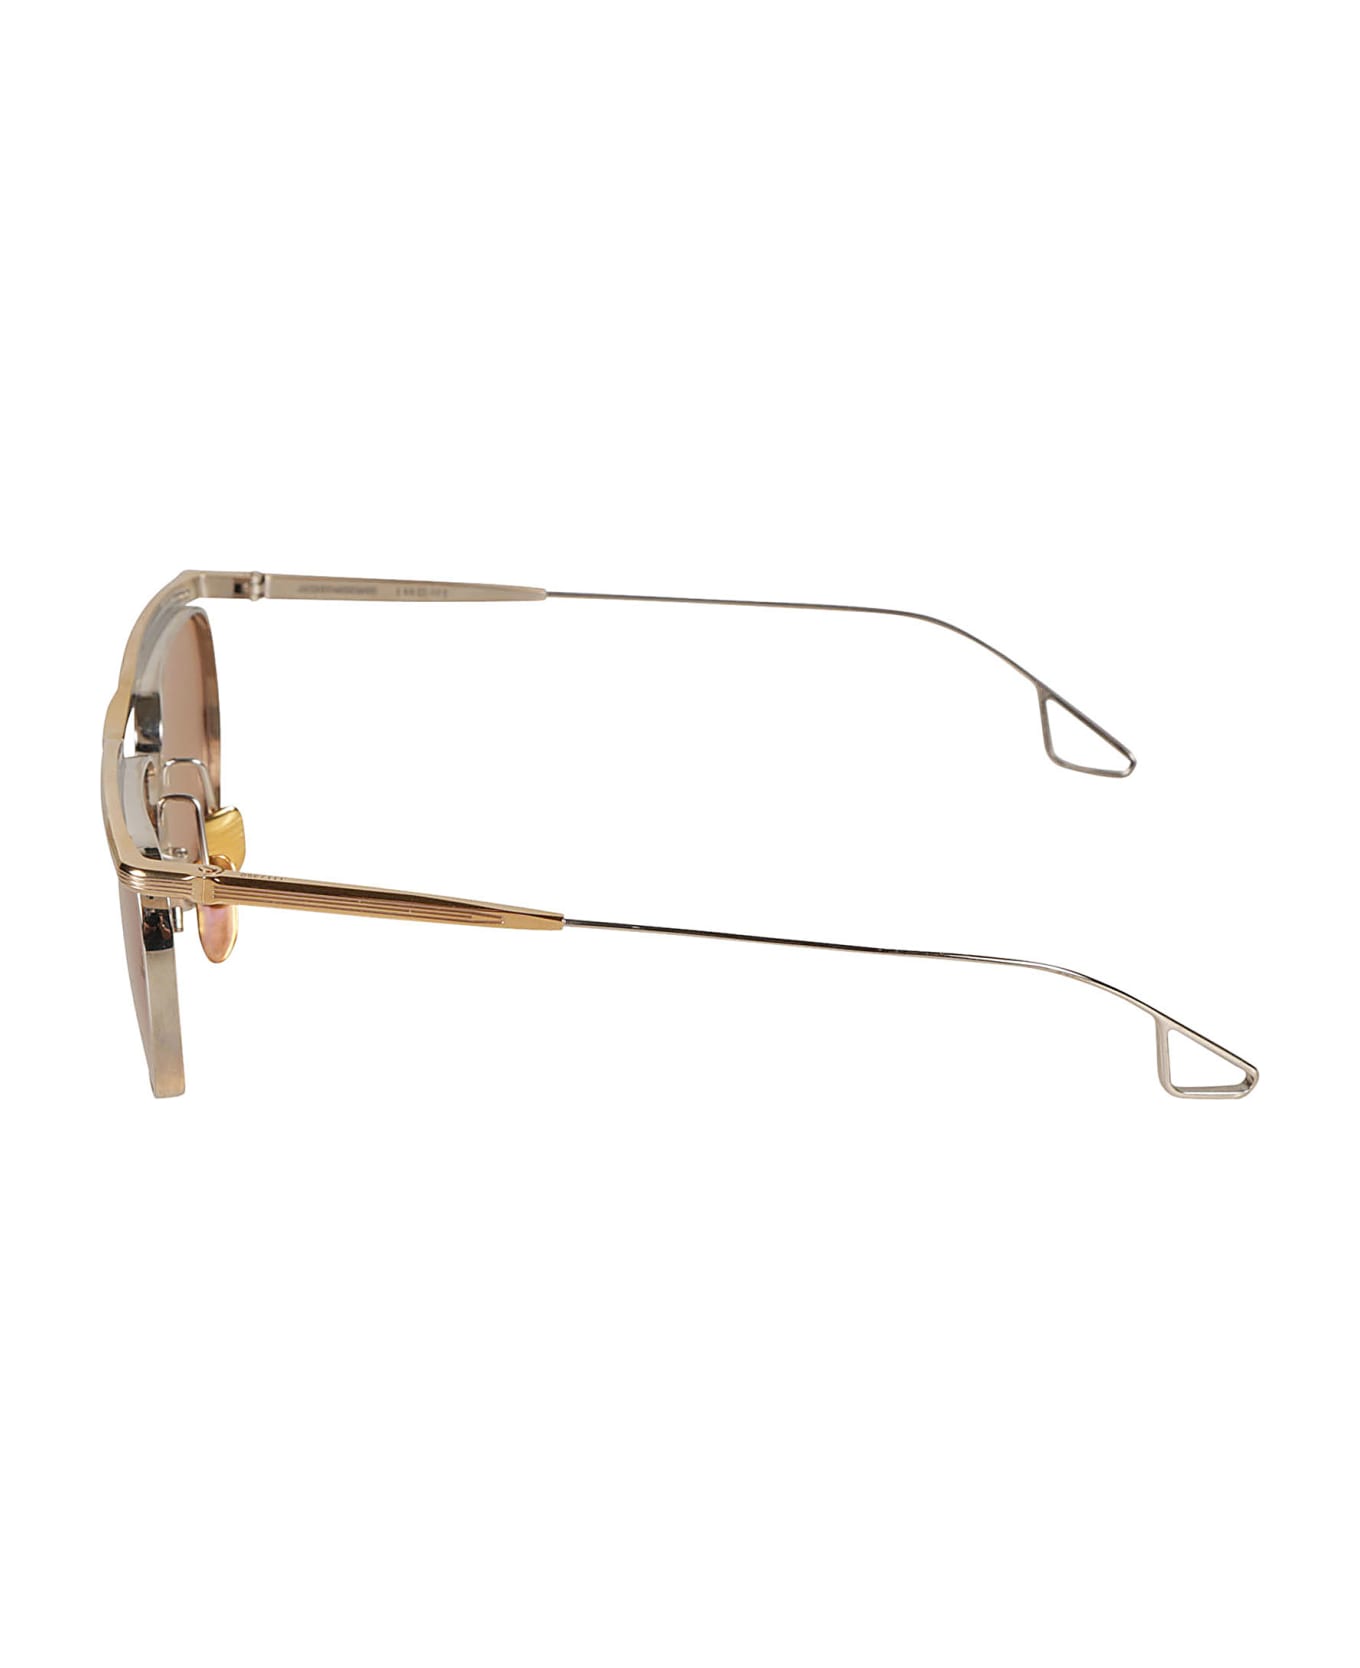 Jacques Marie Mage Seberg Sunglasses Sunglasses - Gold